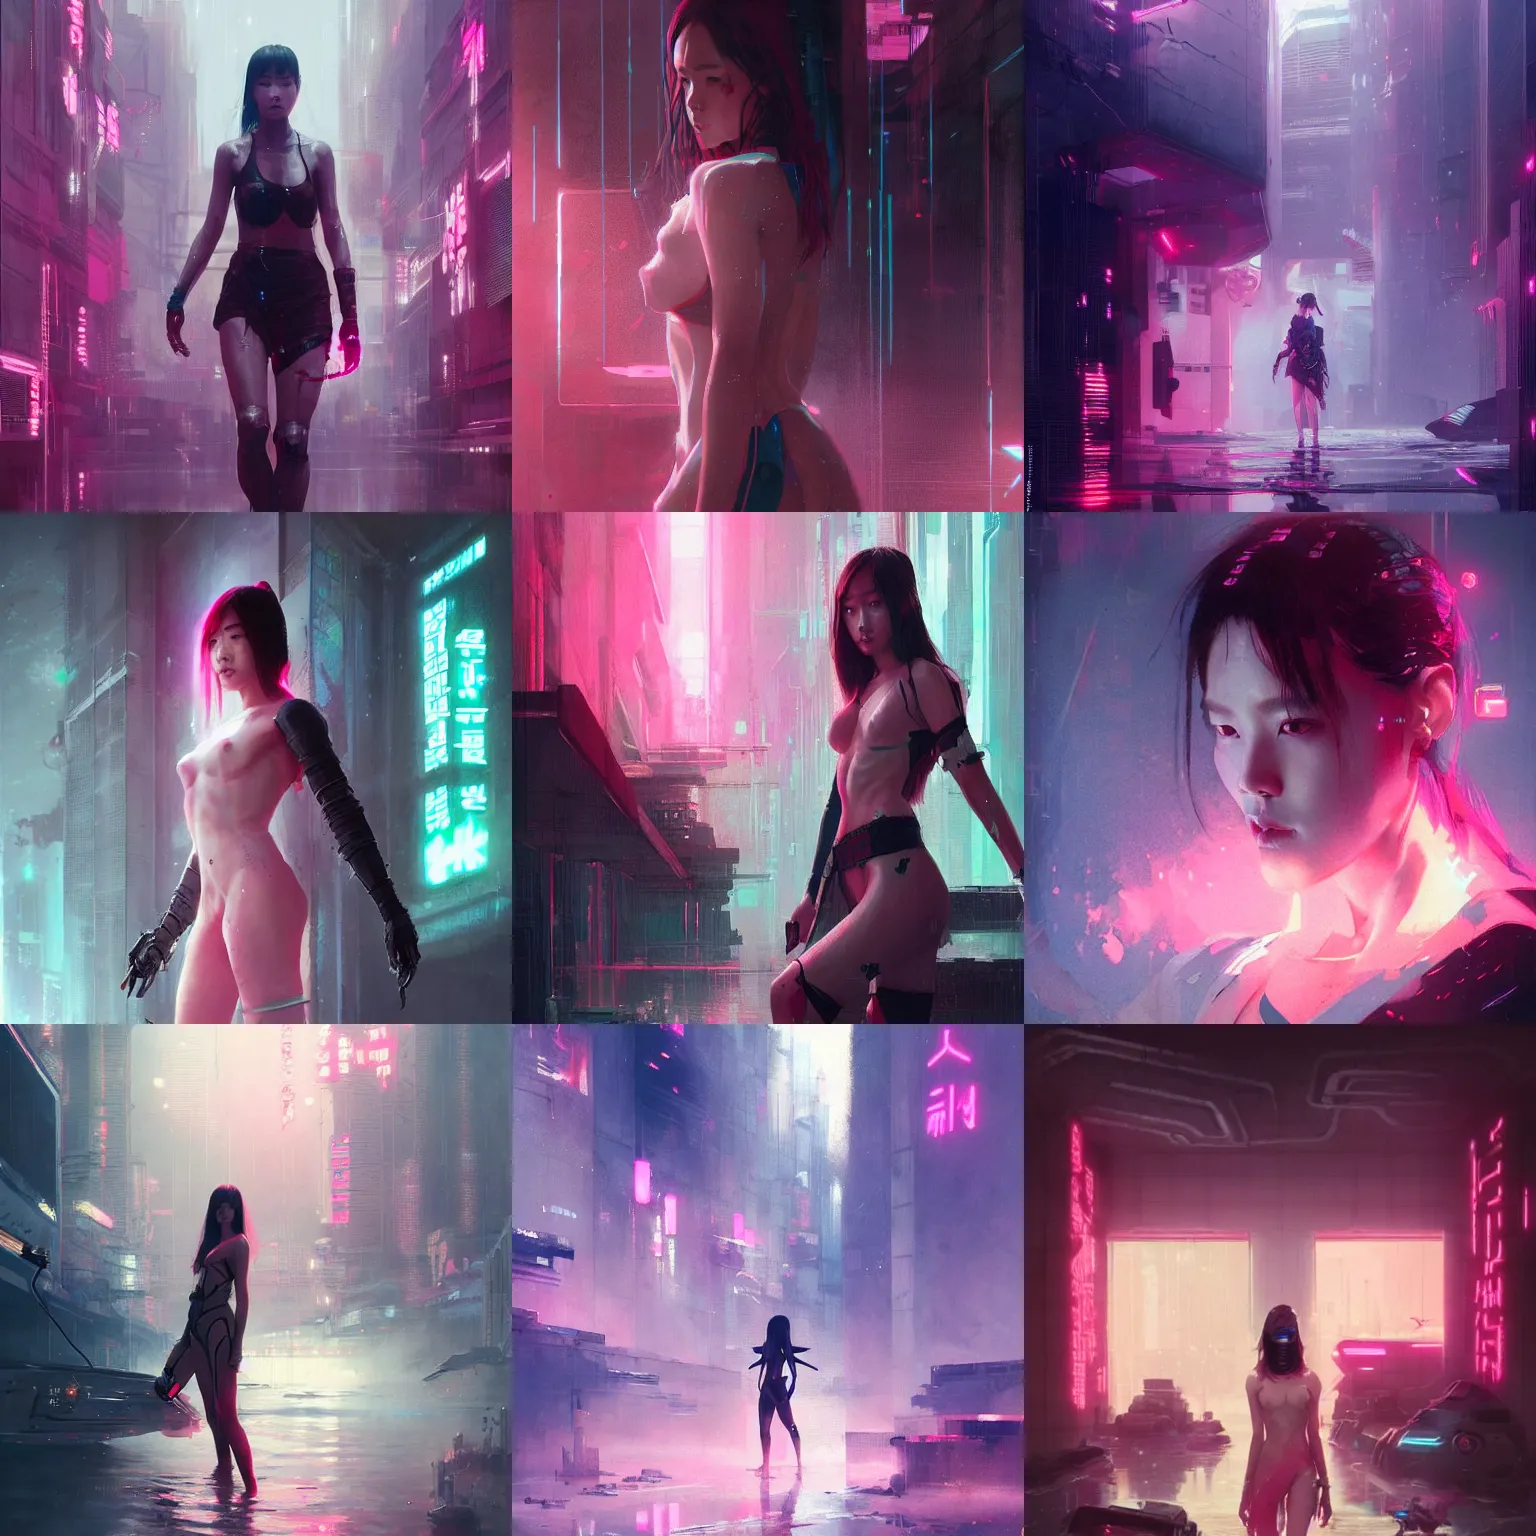 Prompt: lee jin - eun emerging from pink water in cyberpunk theme by greg rutkowski, rule of thirds, seductive look, beautiful